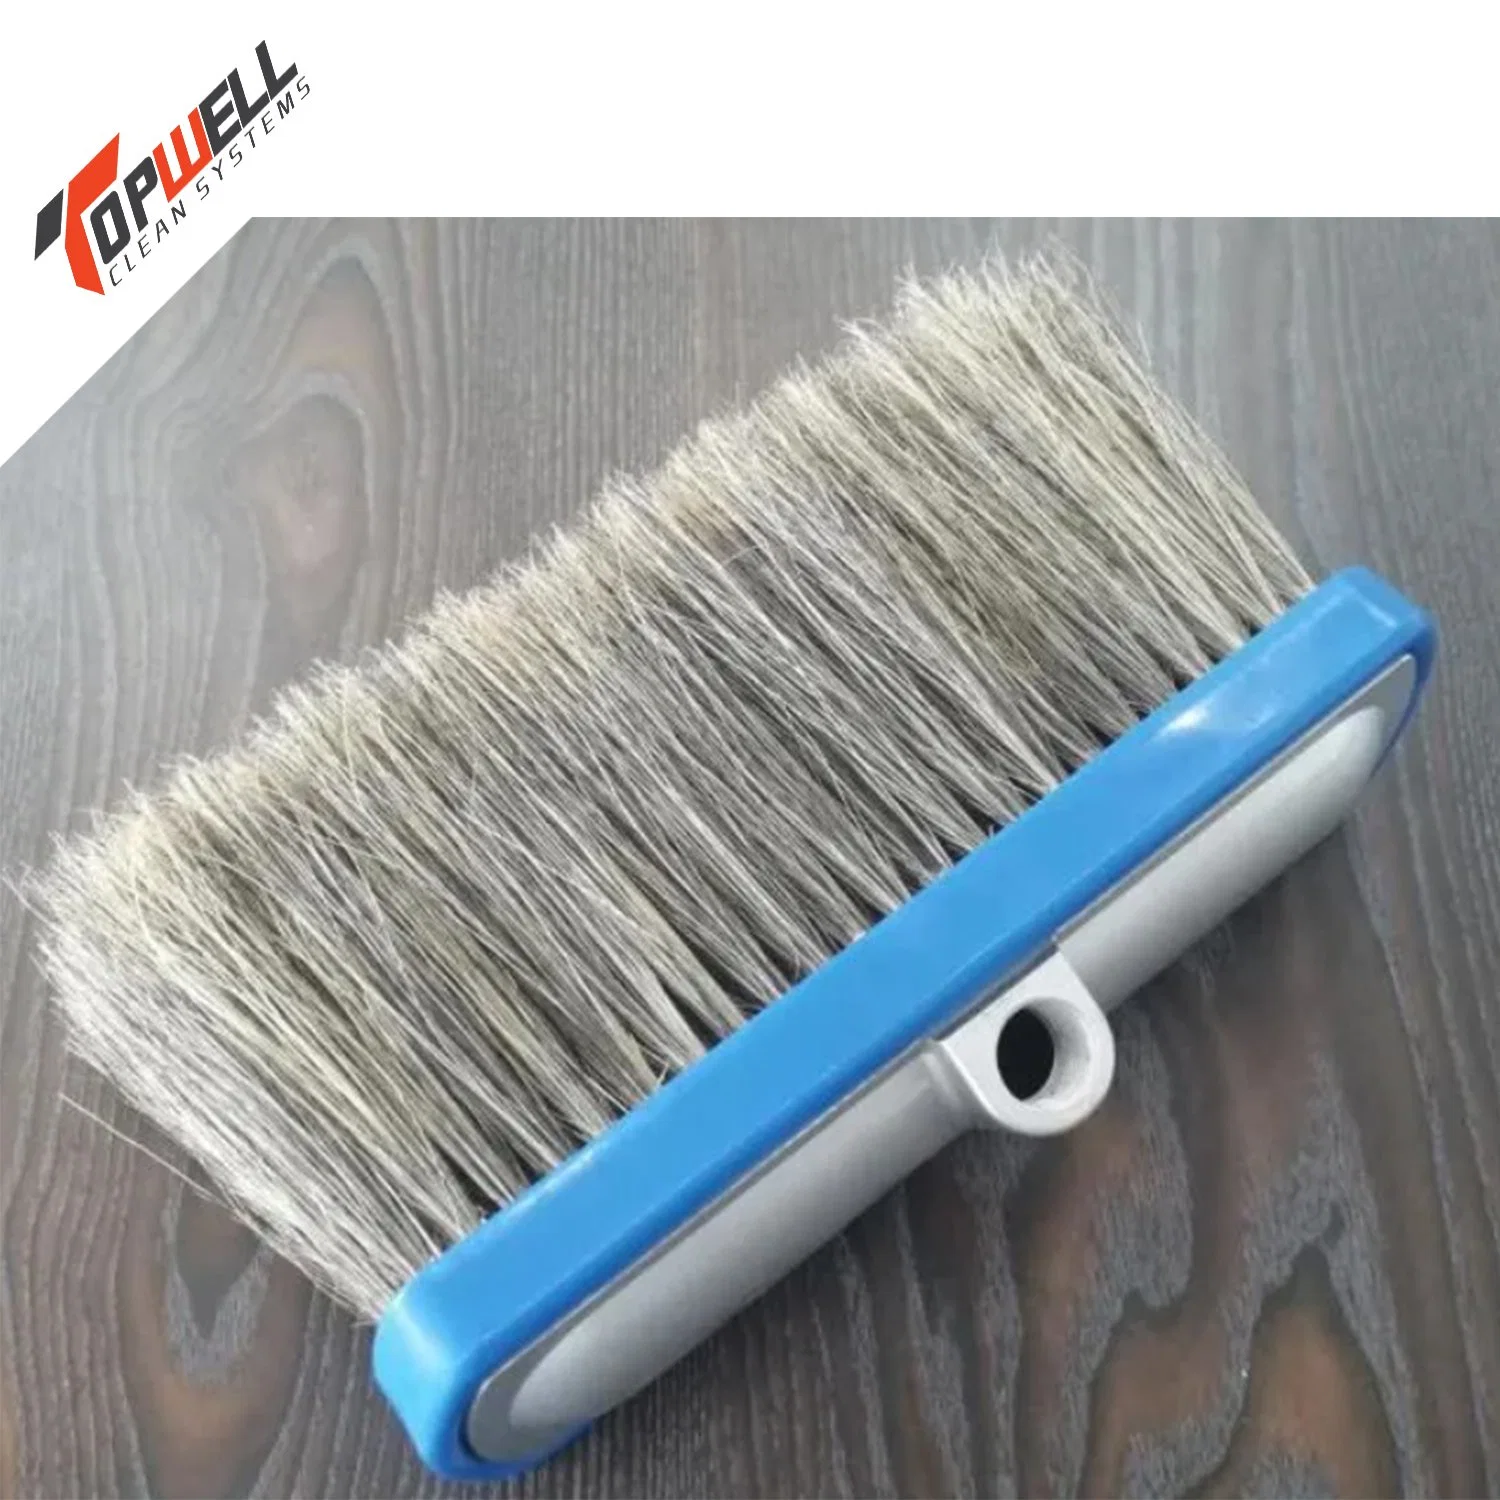 Car Detailing Tools & Wash Brushes; 100% Pure Hog Hair Car Wash Brushes with Handles